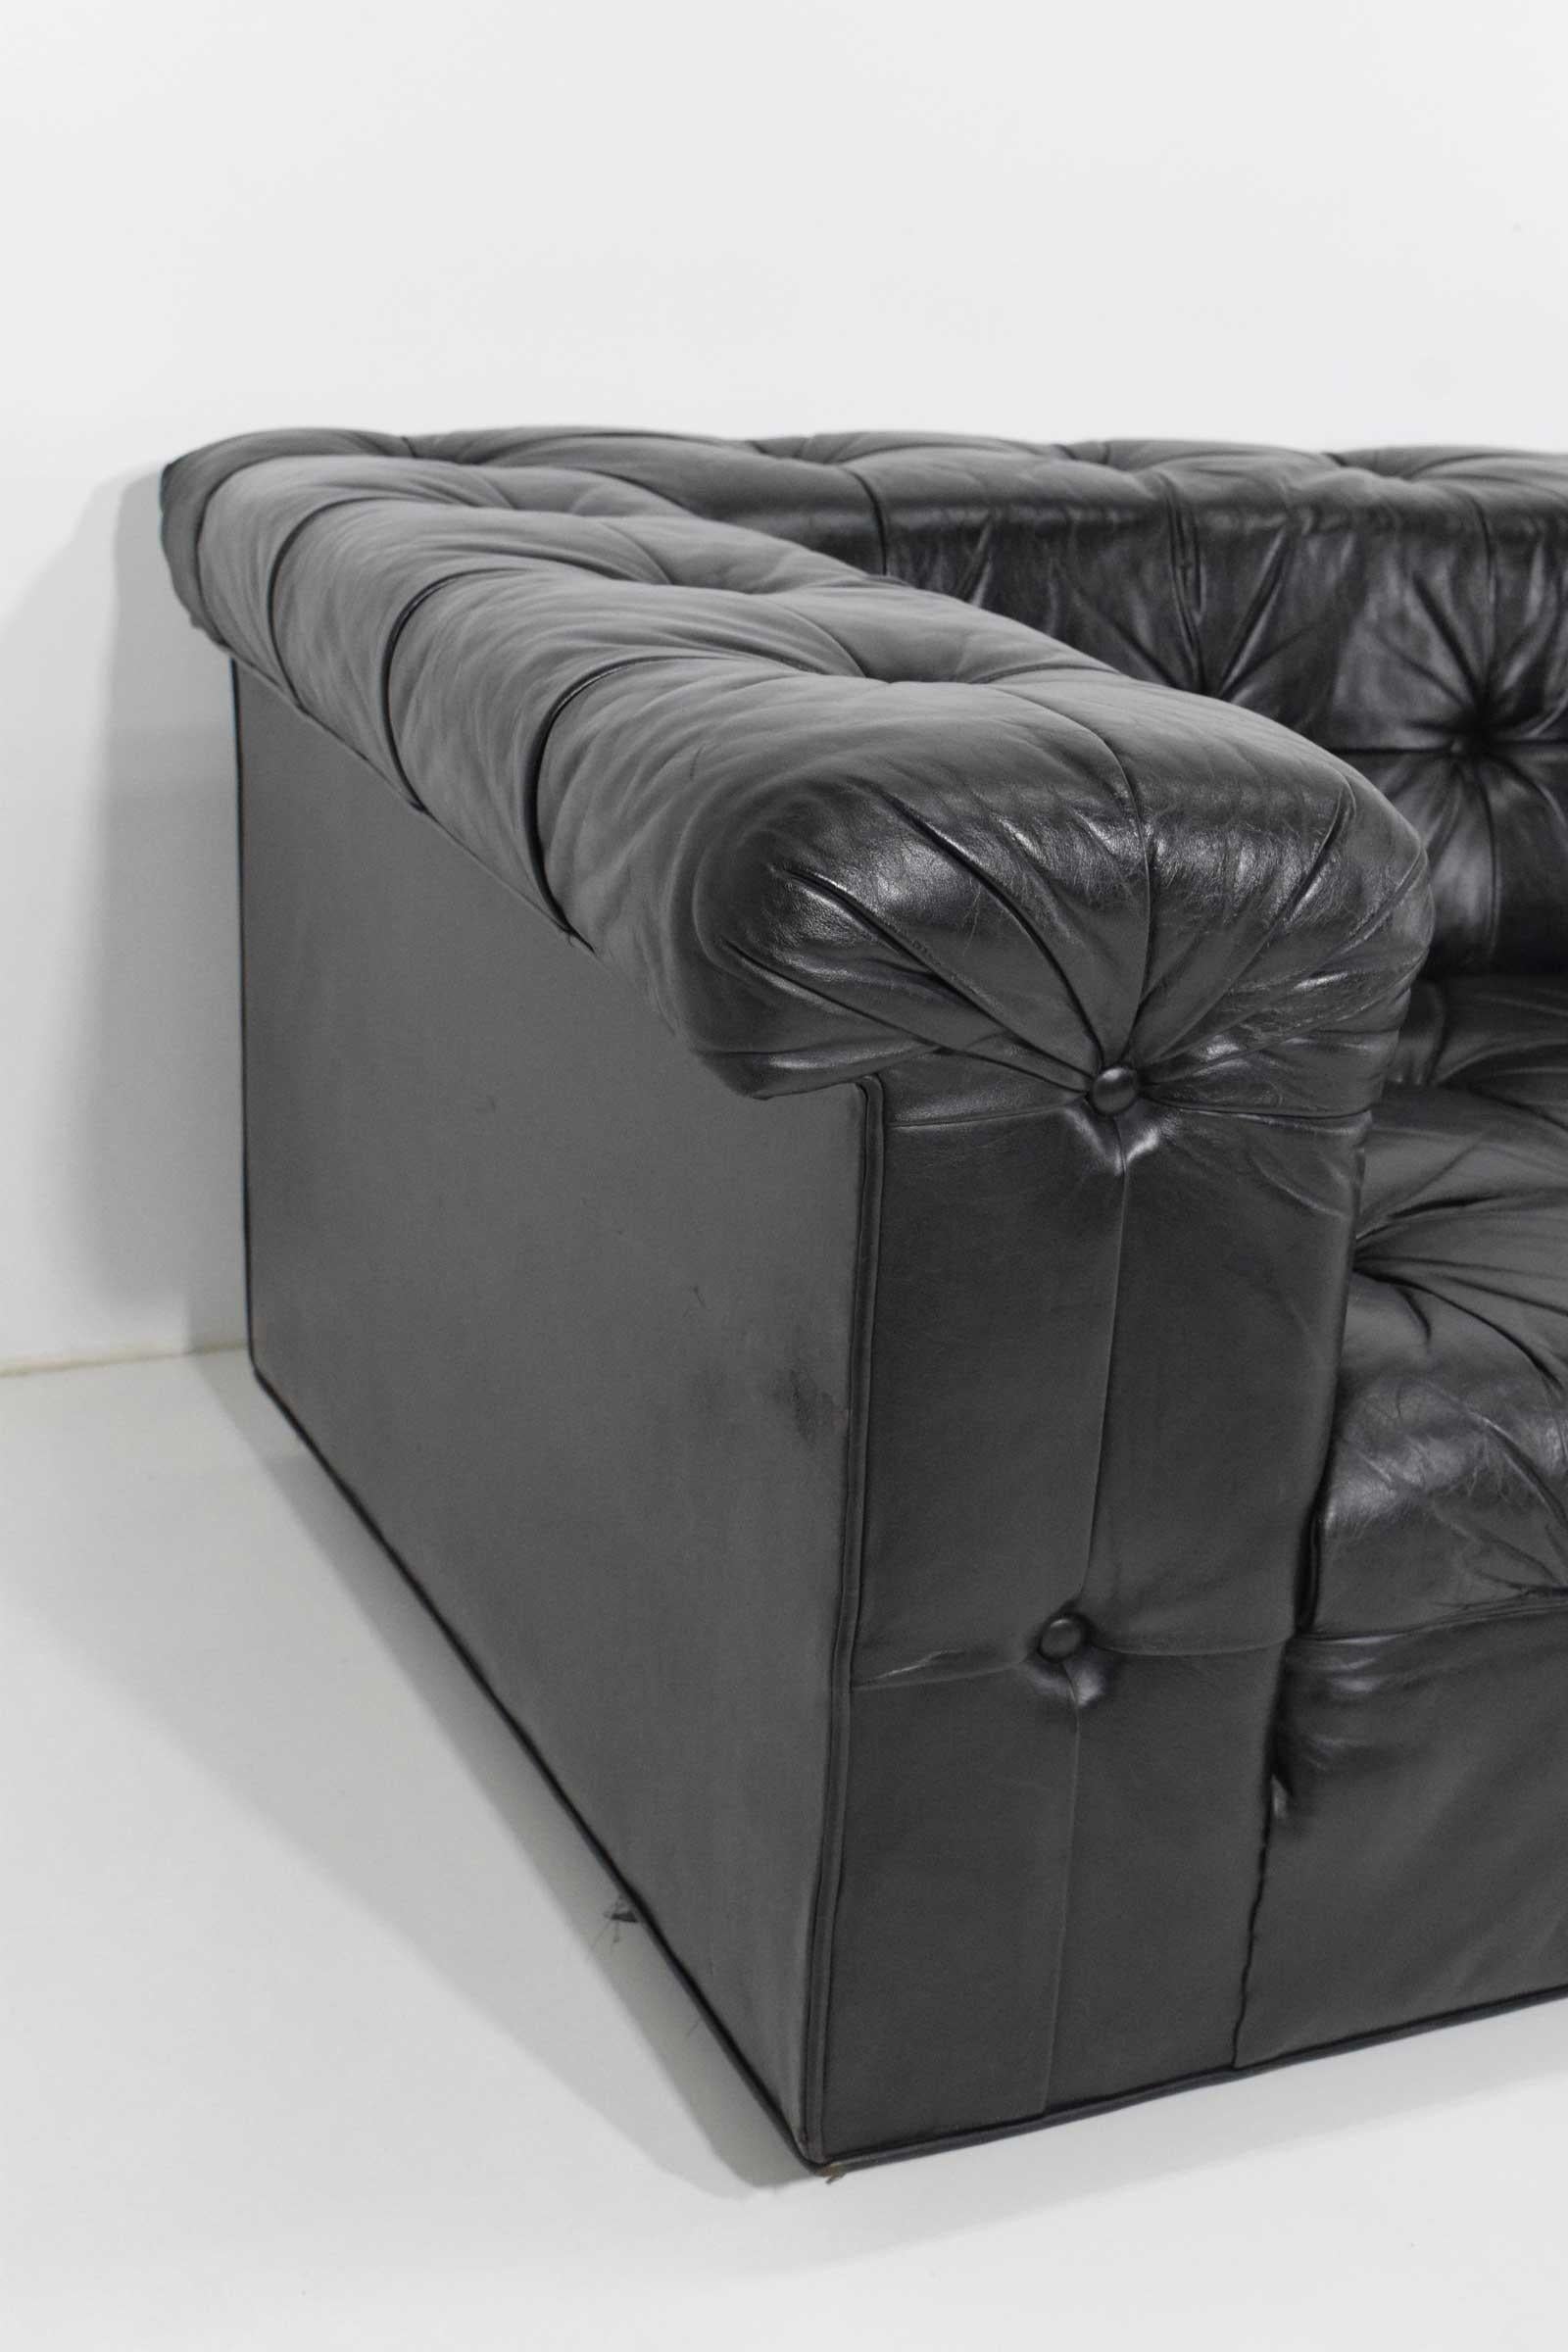 Edward Wormley for Dunbar Party Sofa Model 5407 in Black Leather 1